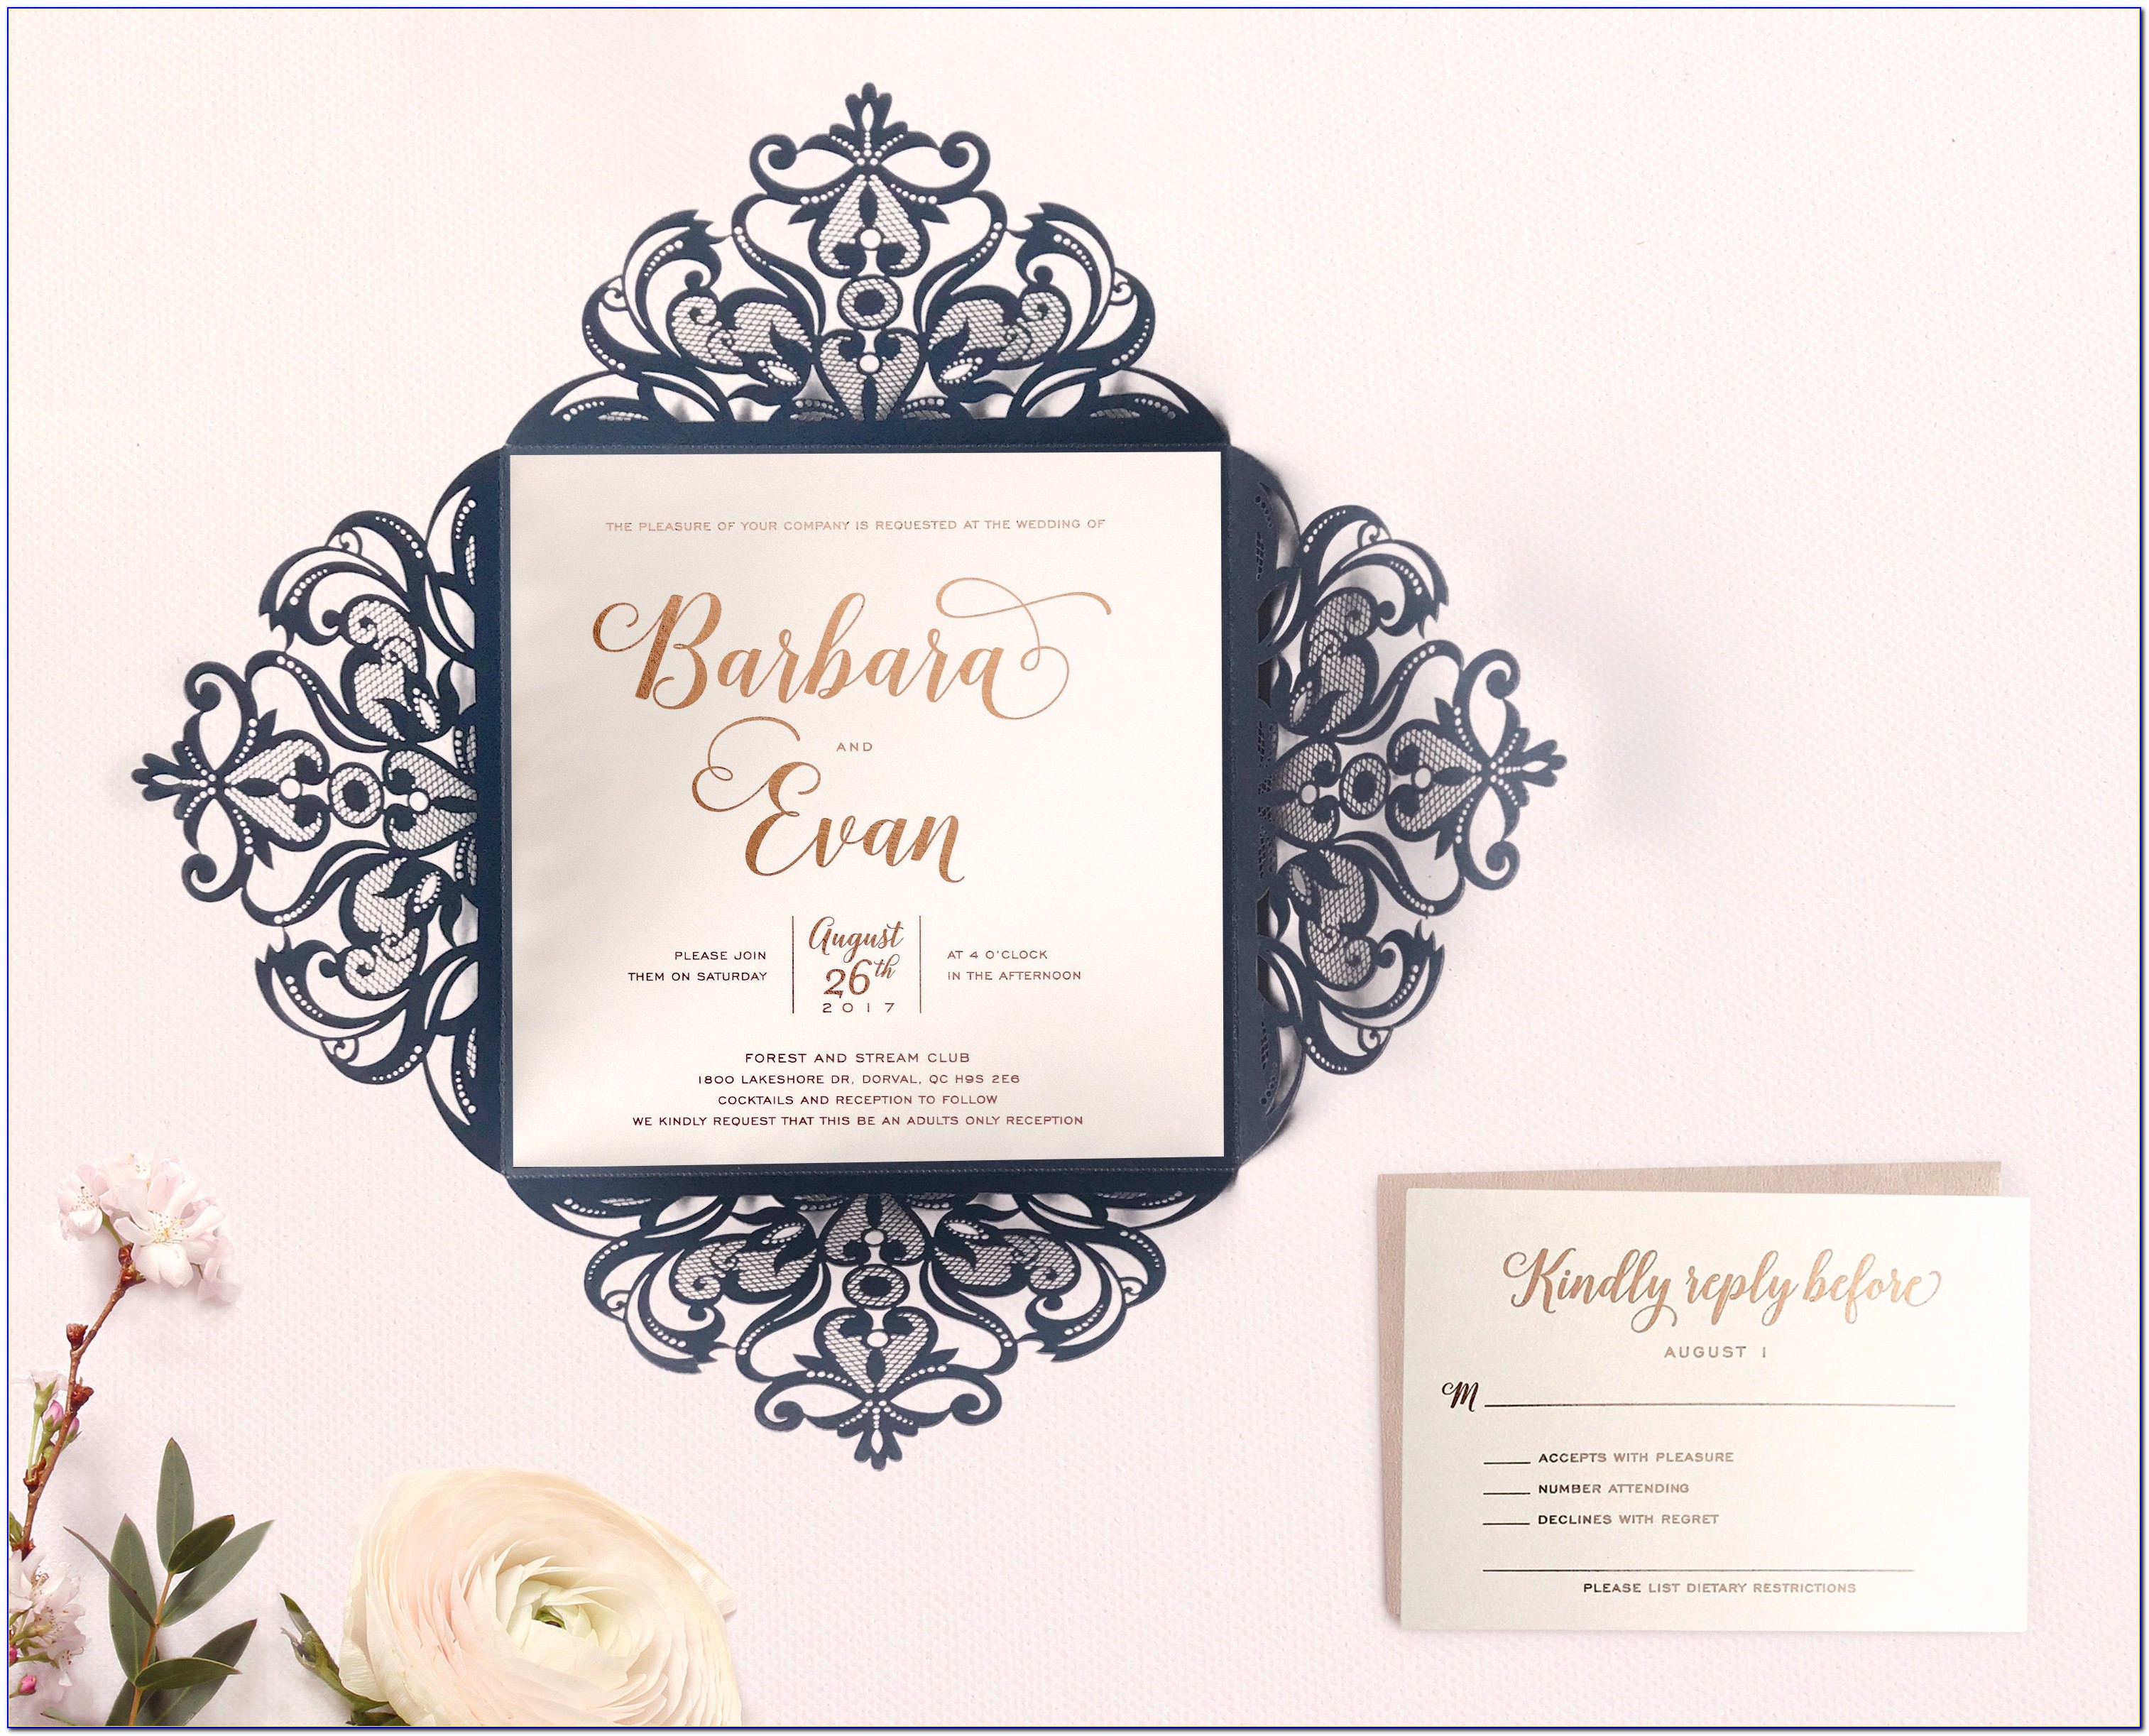 Rose Gold Foil Printed Wedding Invitations